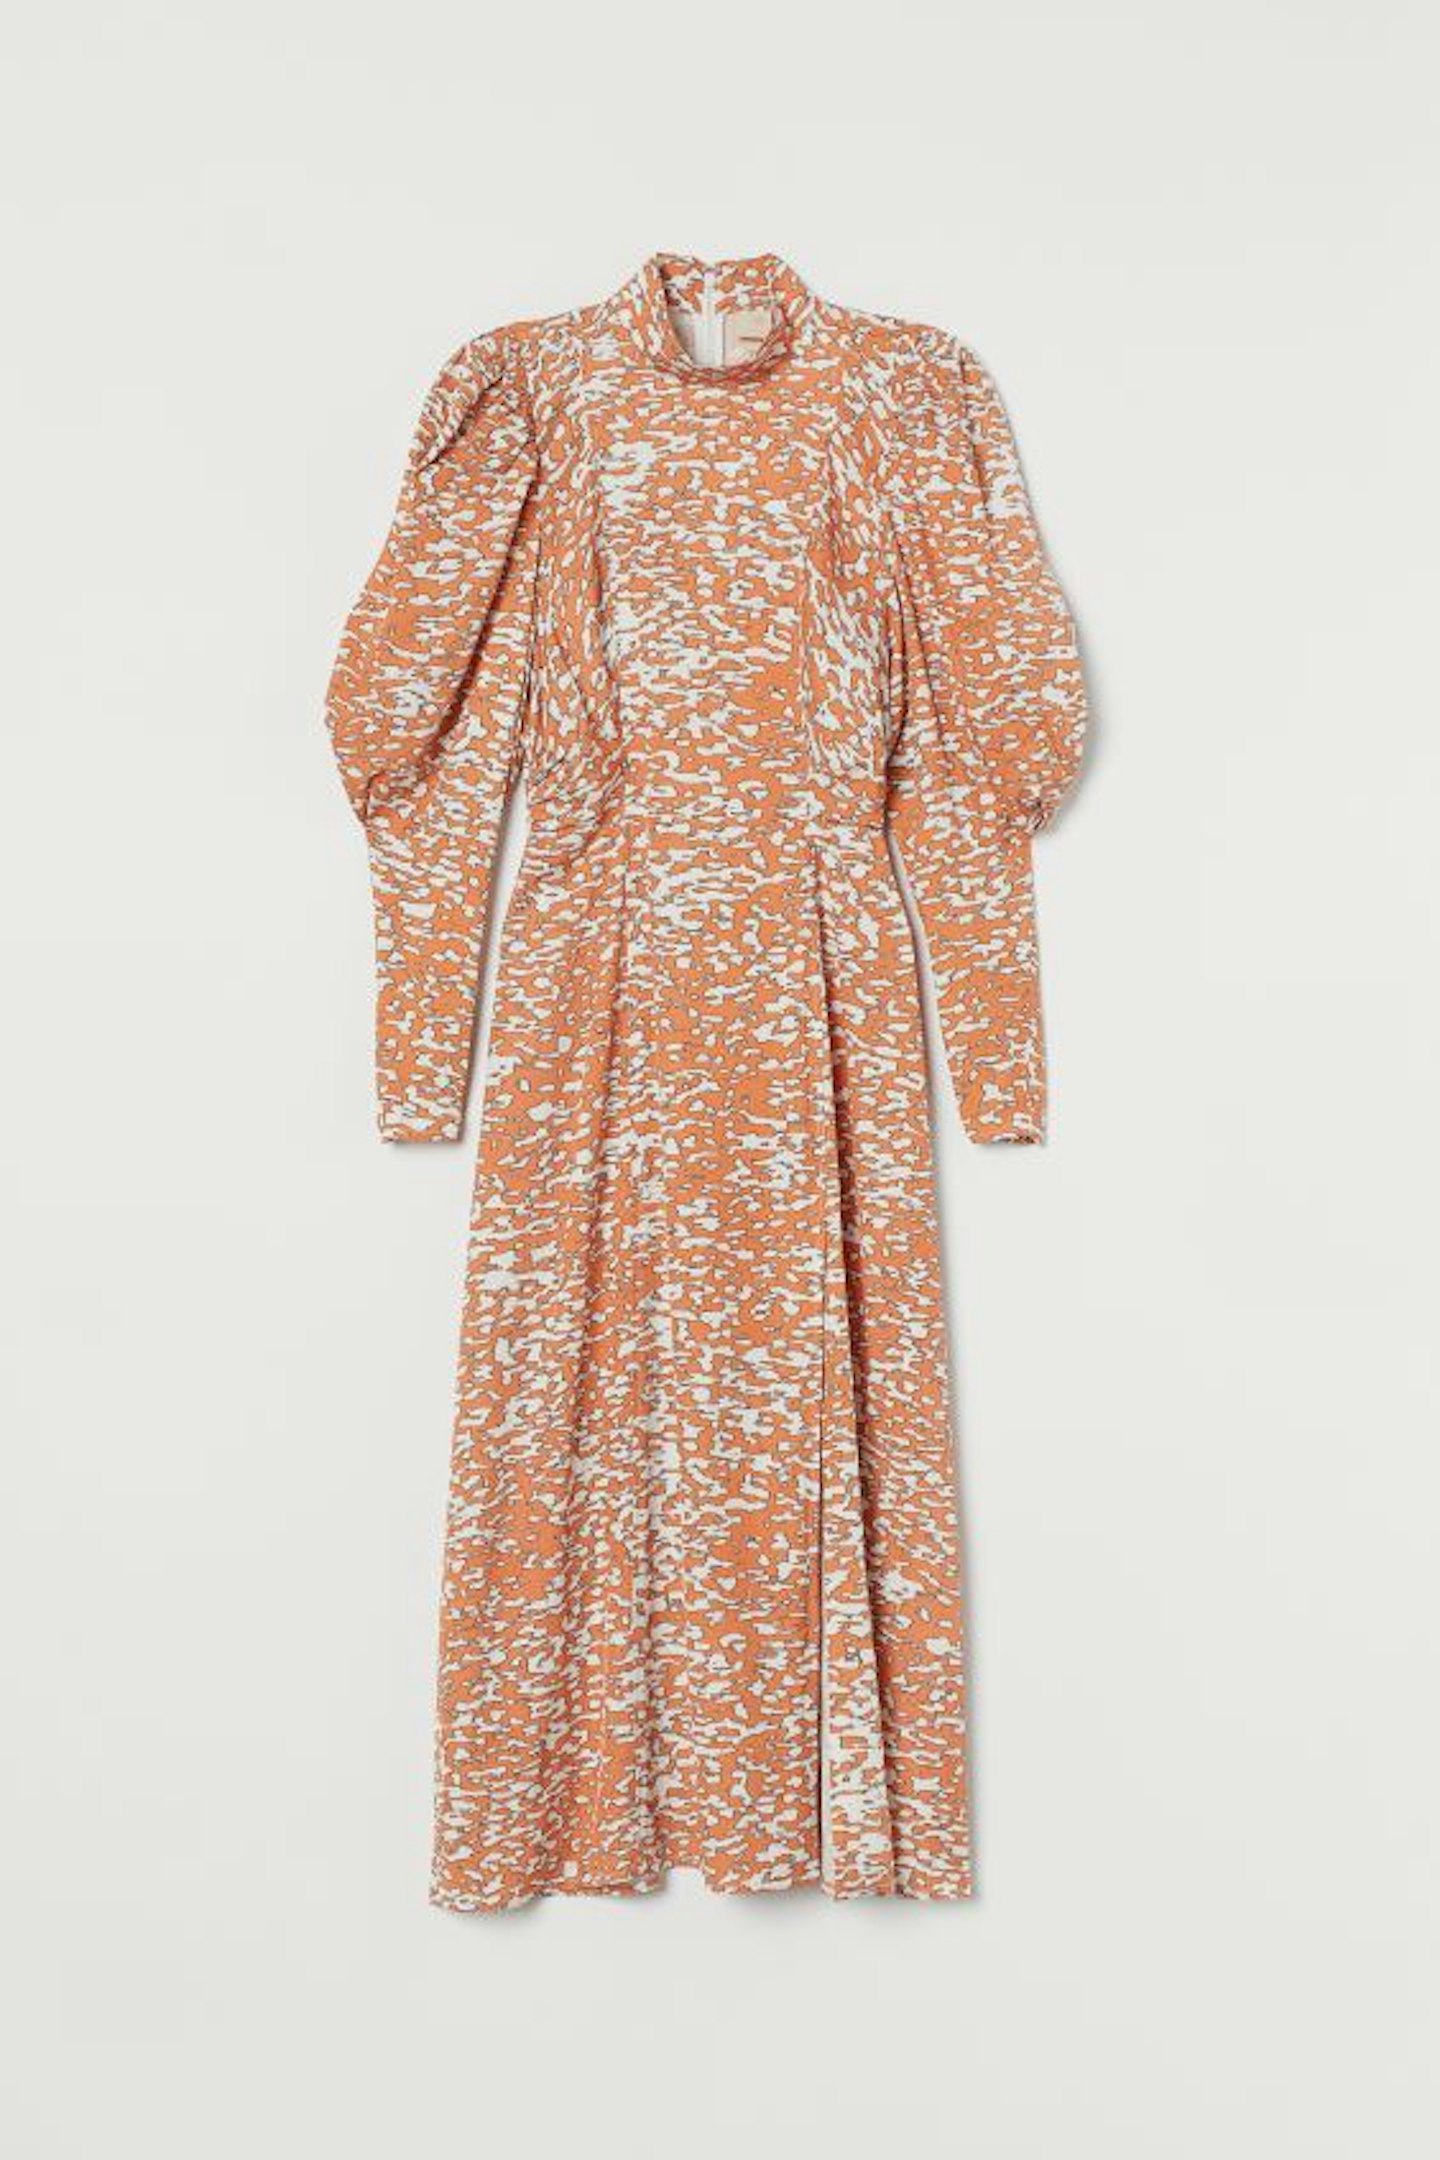 H&M, Puff-sleeved dress, £39.99